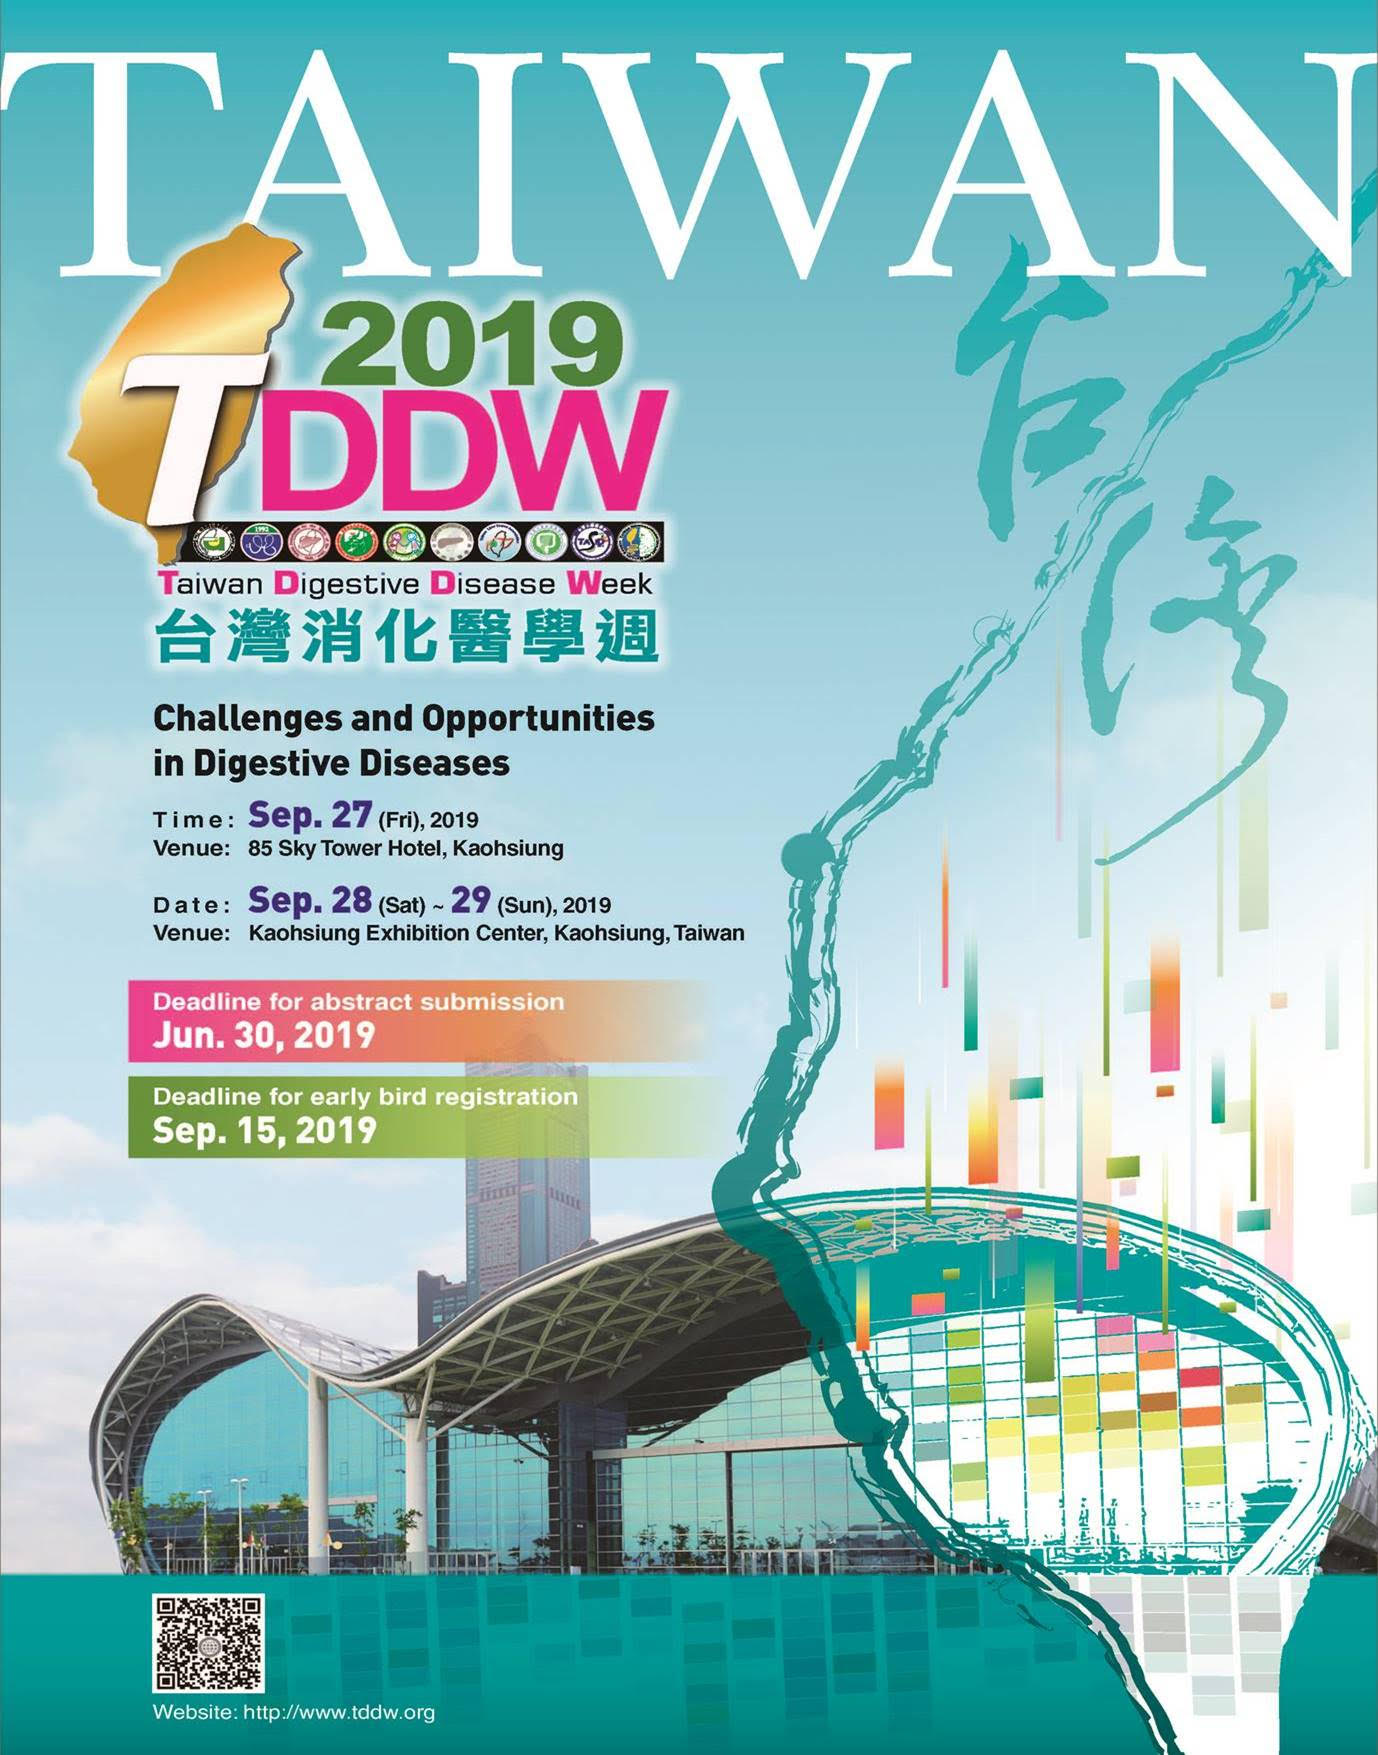 Taiwan Digestive Disease Week 2019 (TDDW 2019)